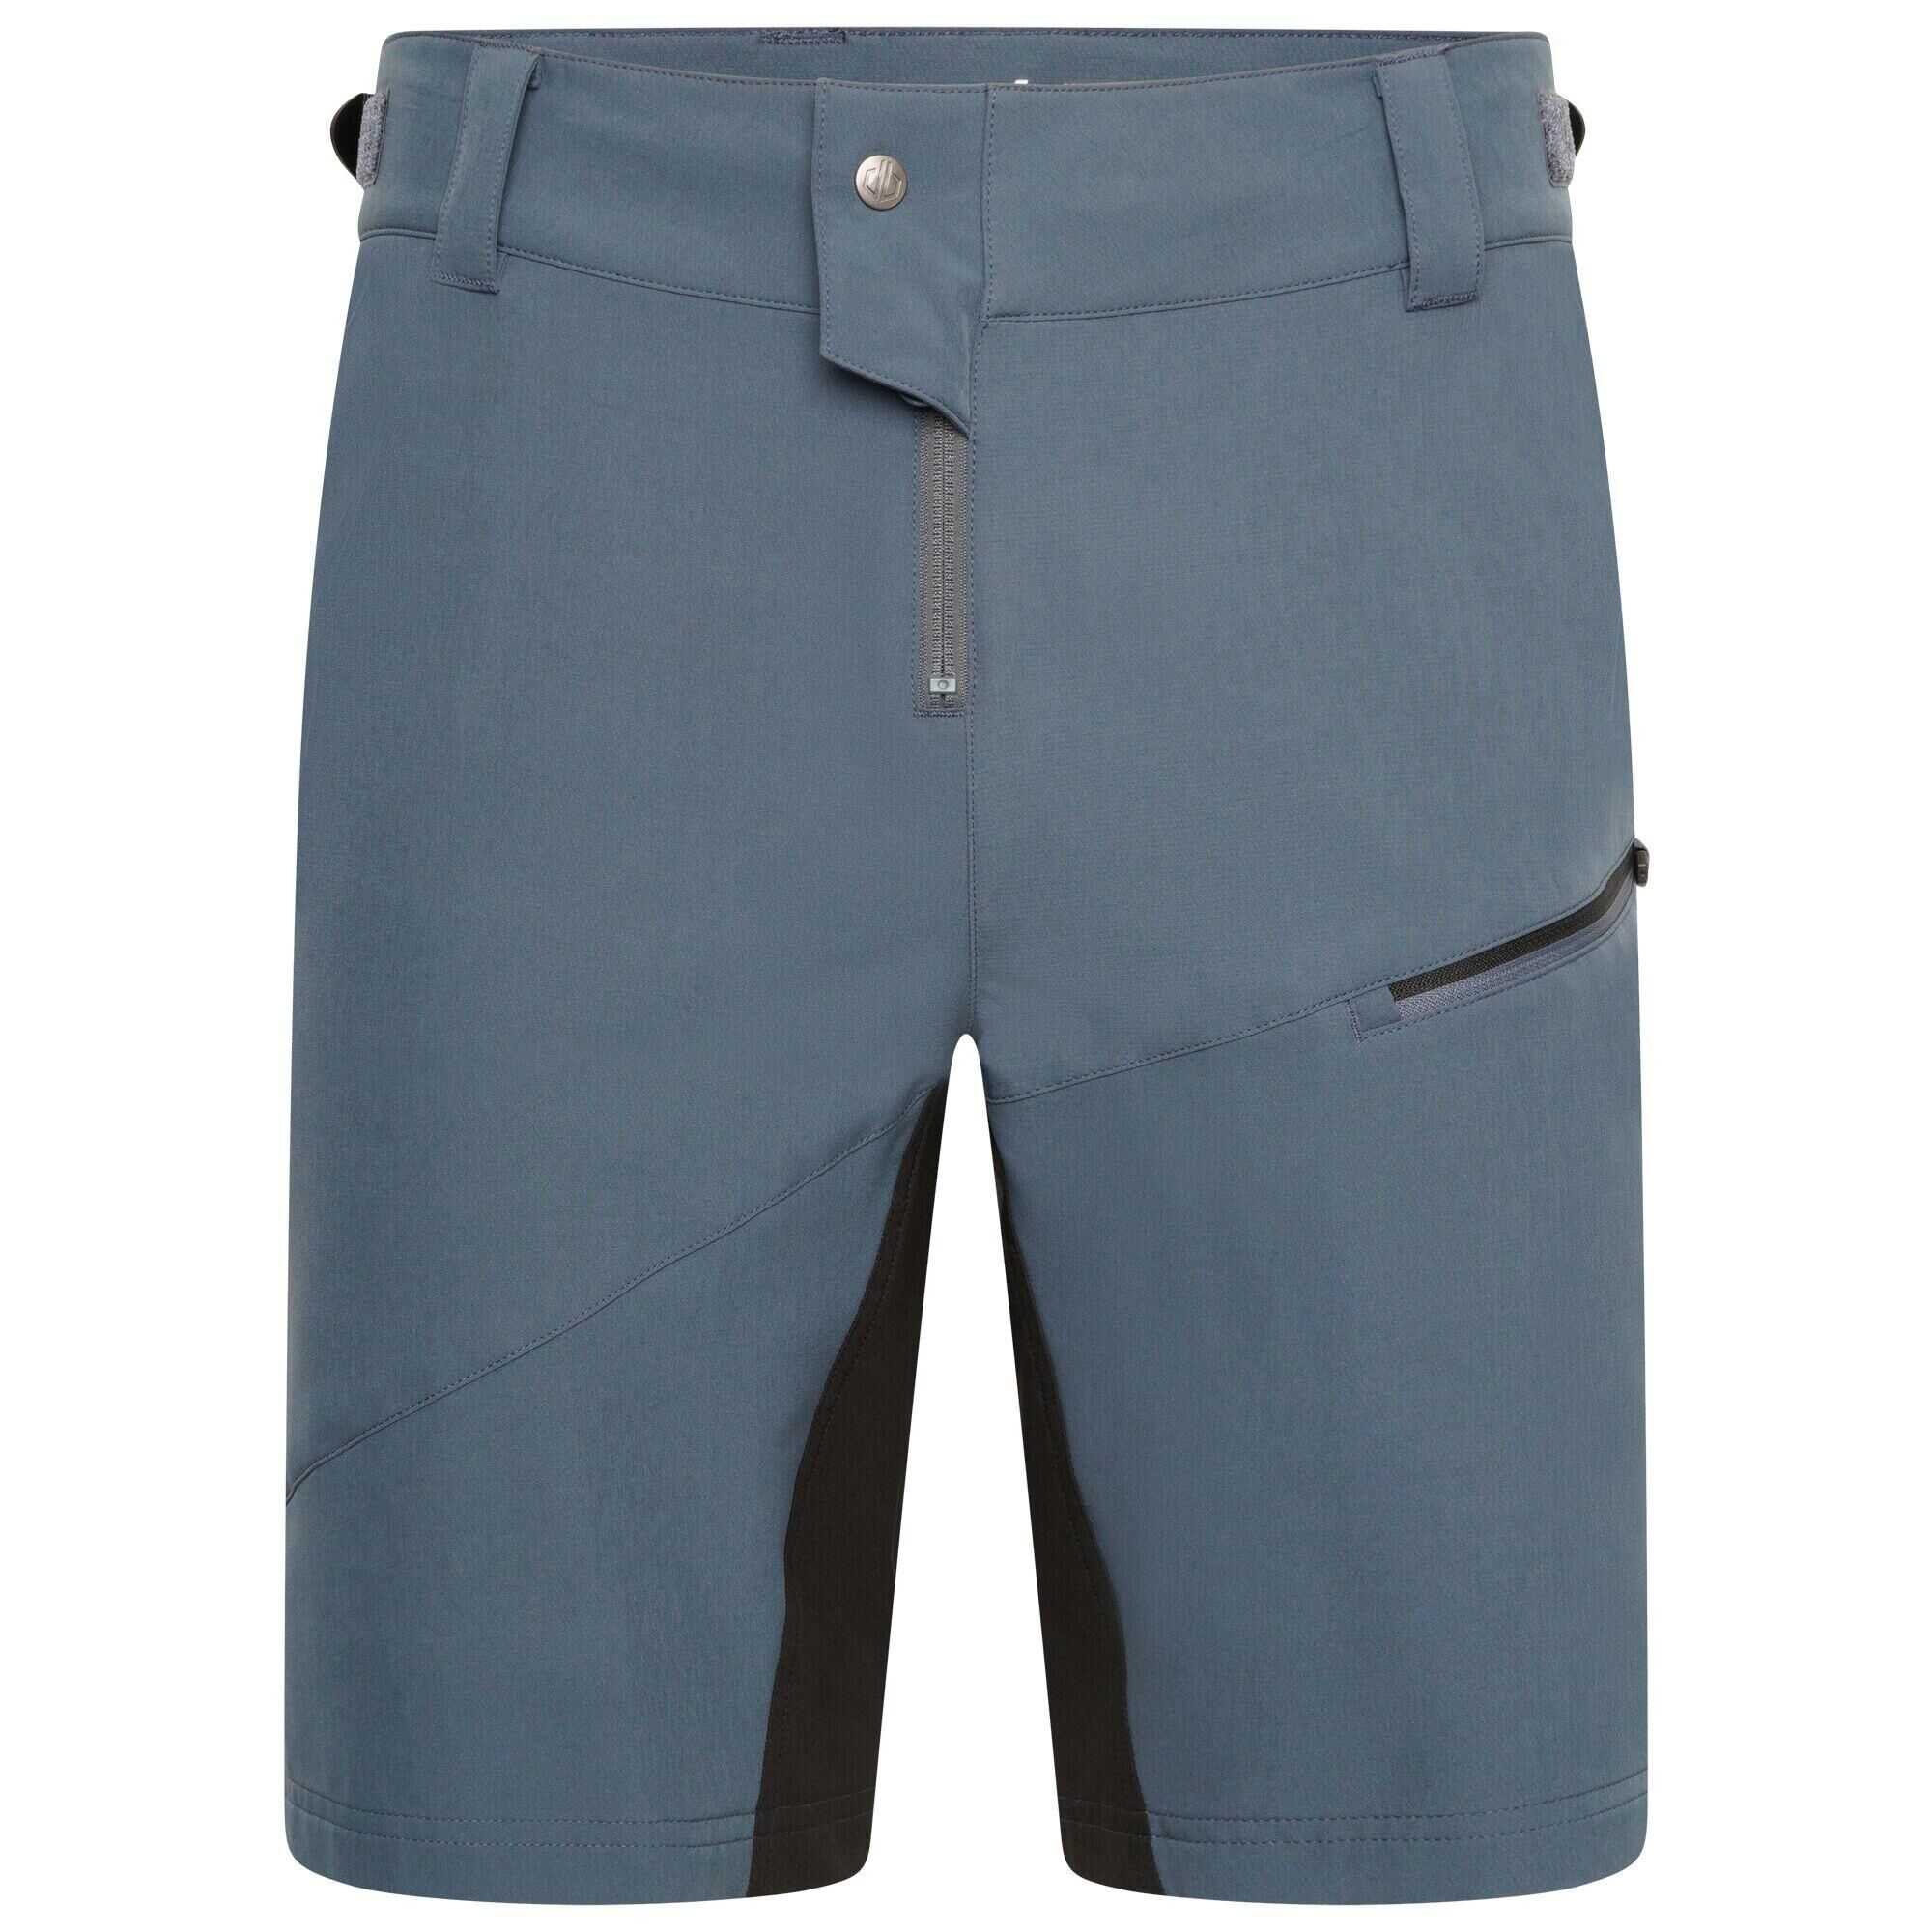 DARE 2B Duration Men's Hiking Shorts - Dark Blue